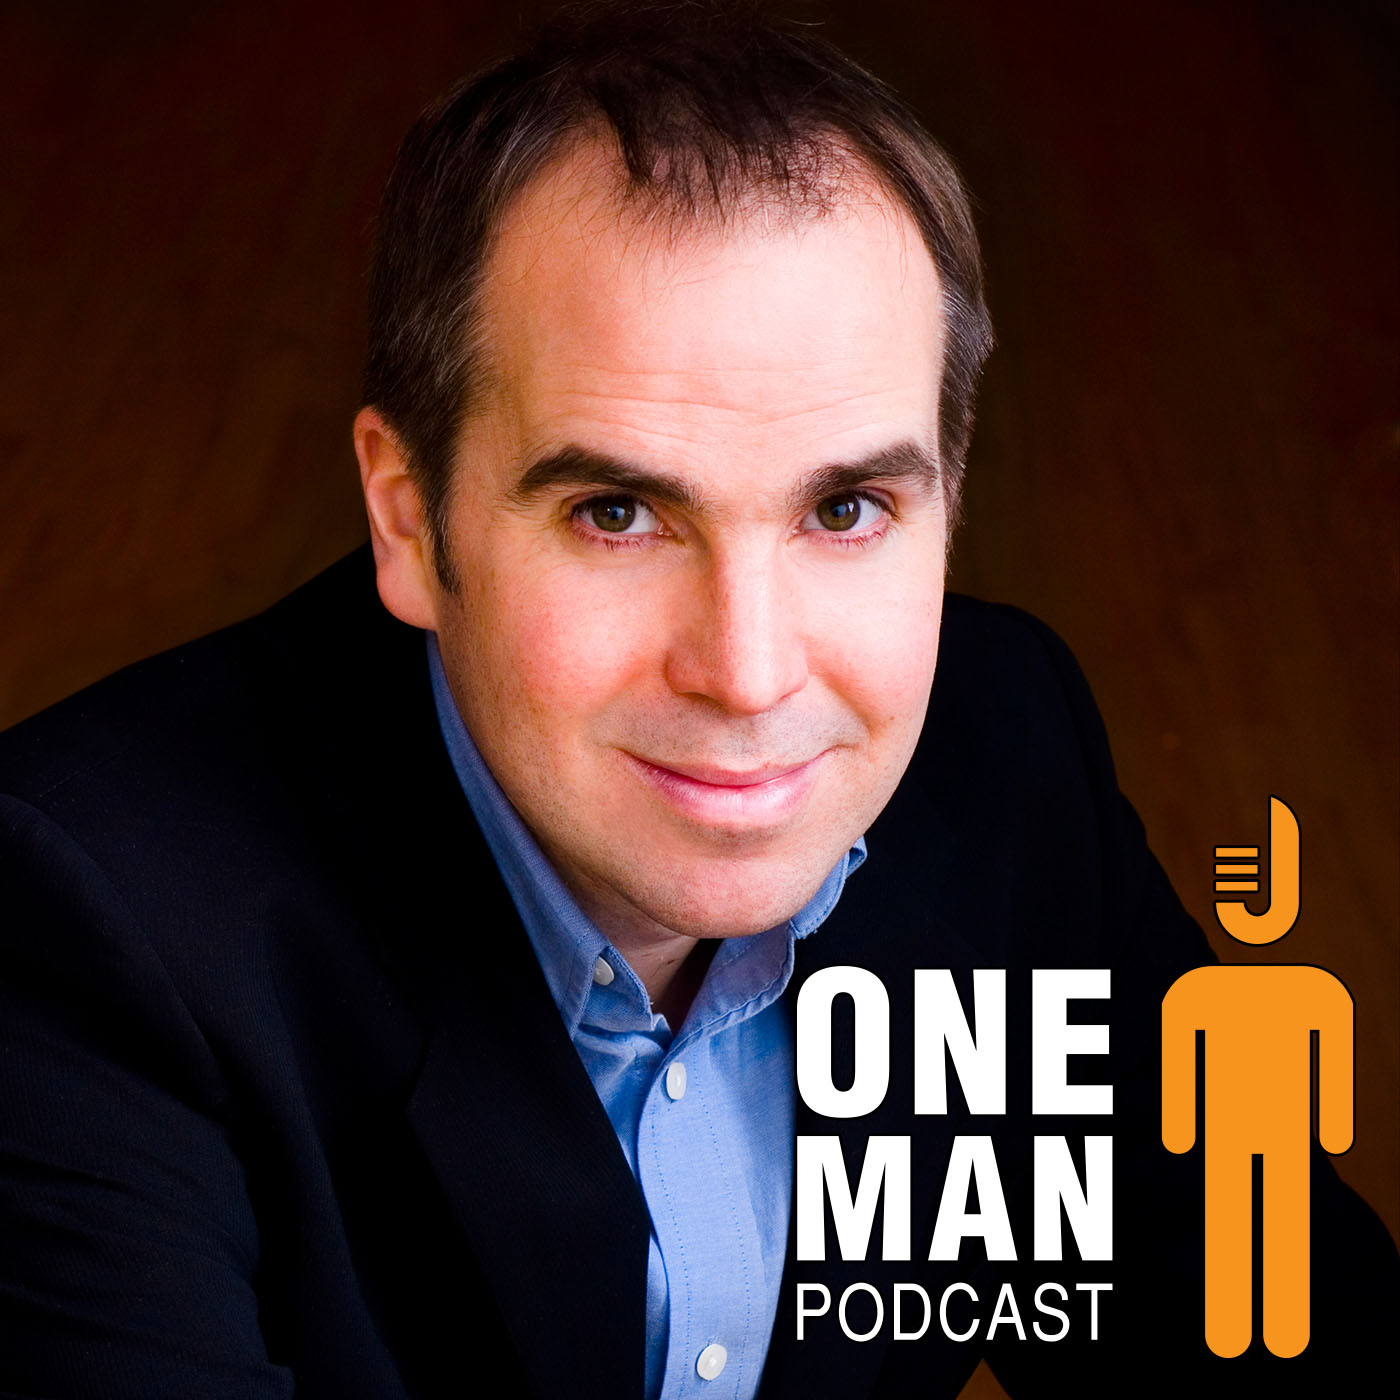 One Man Podcast - David Pryde